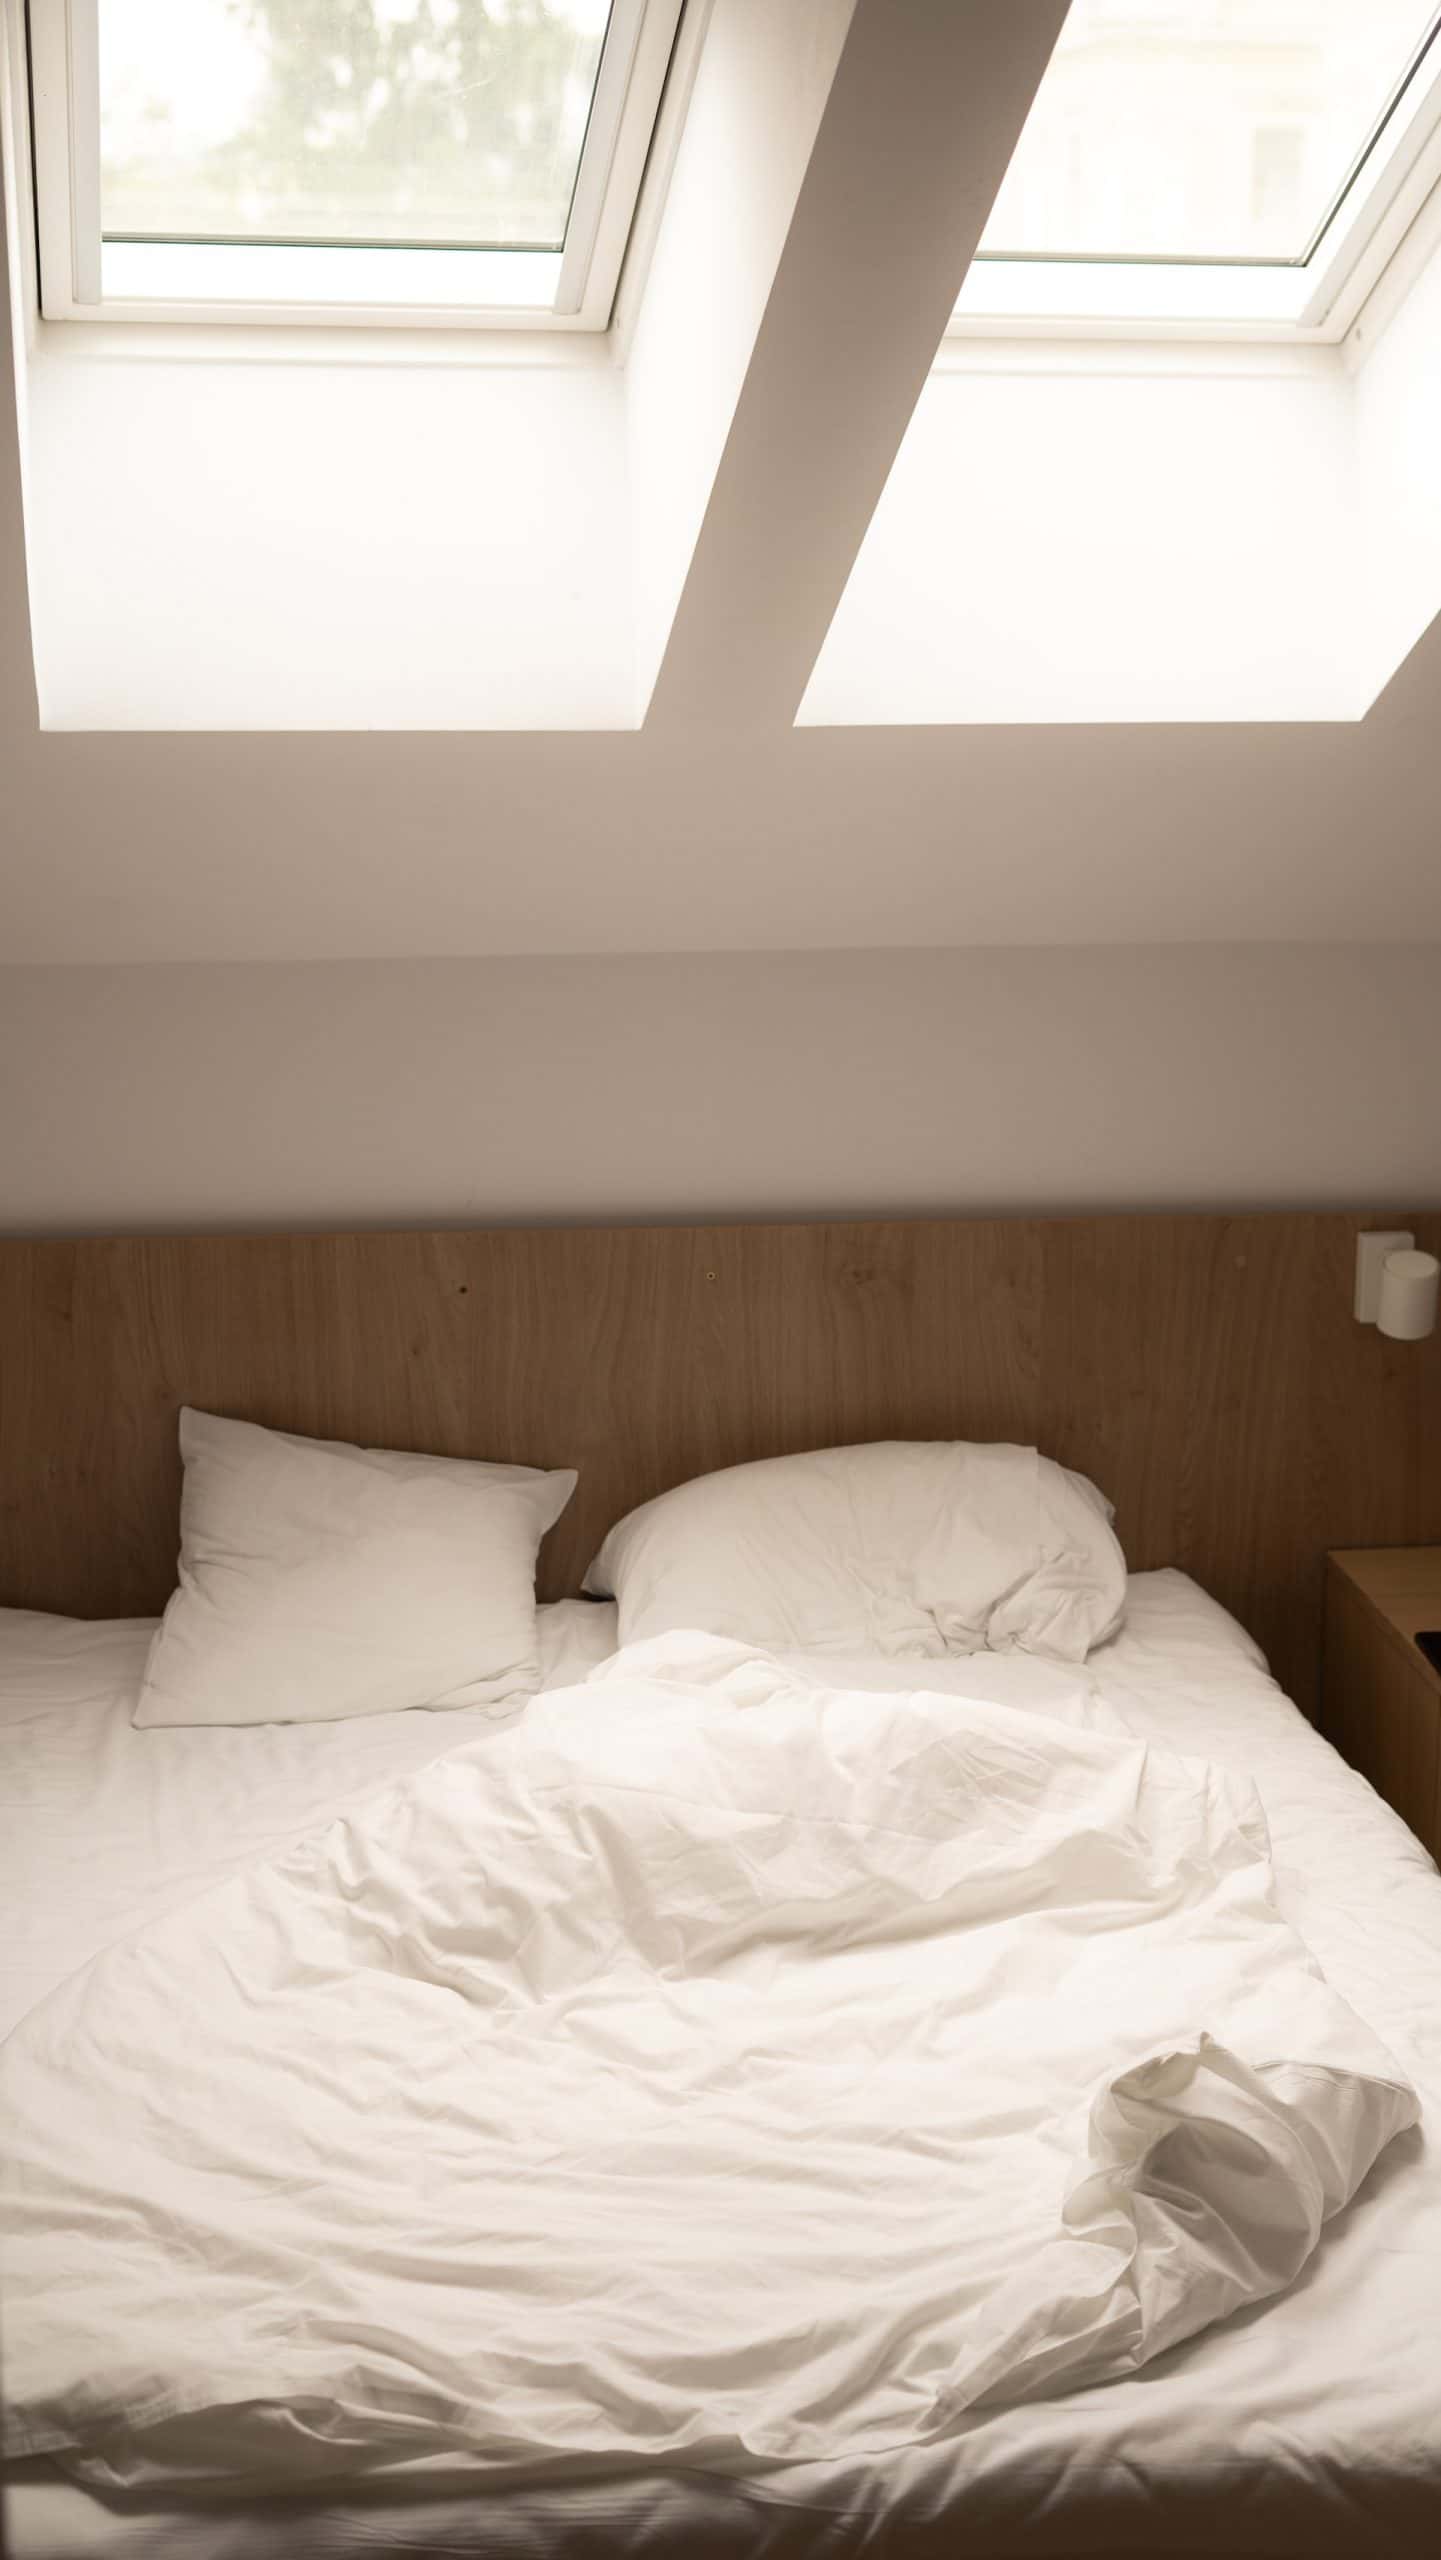 ventilating skylight roof window design